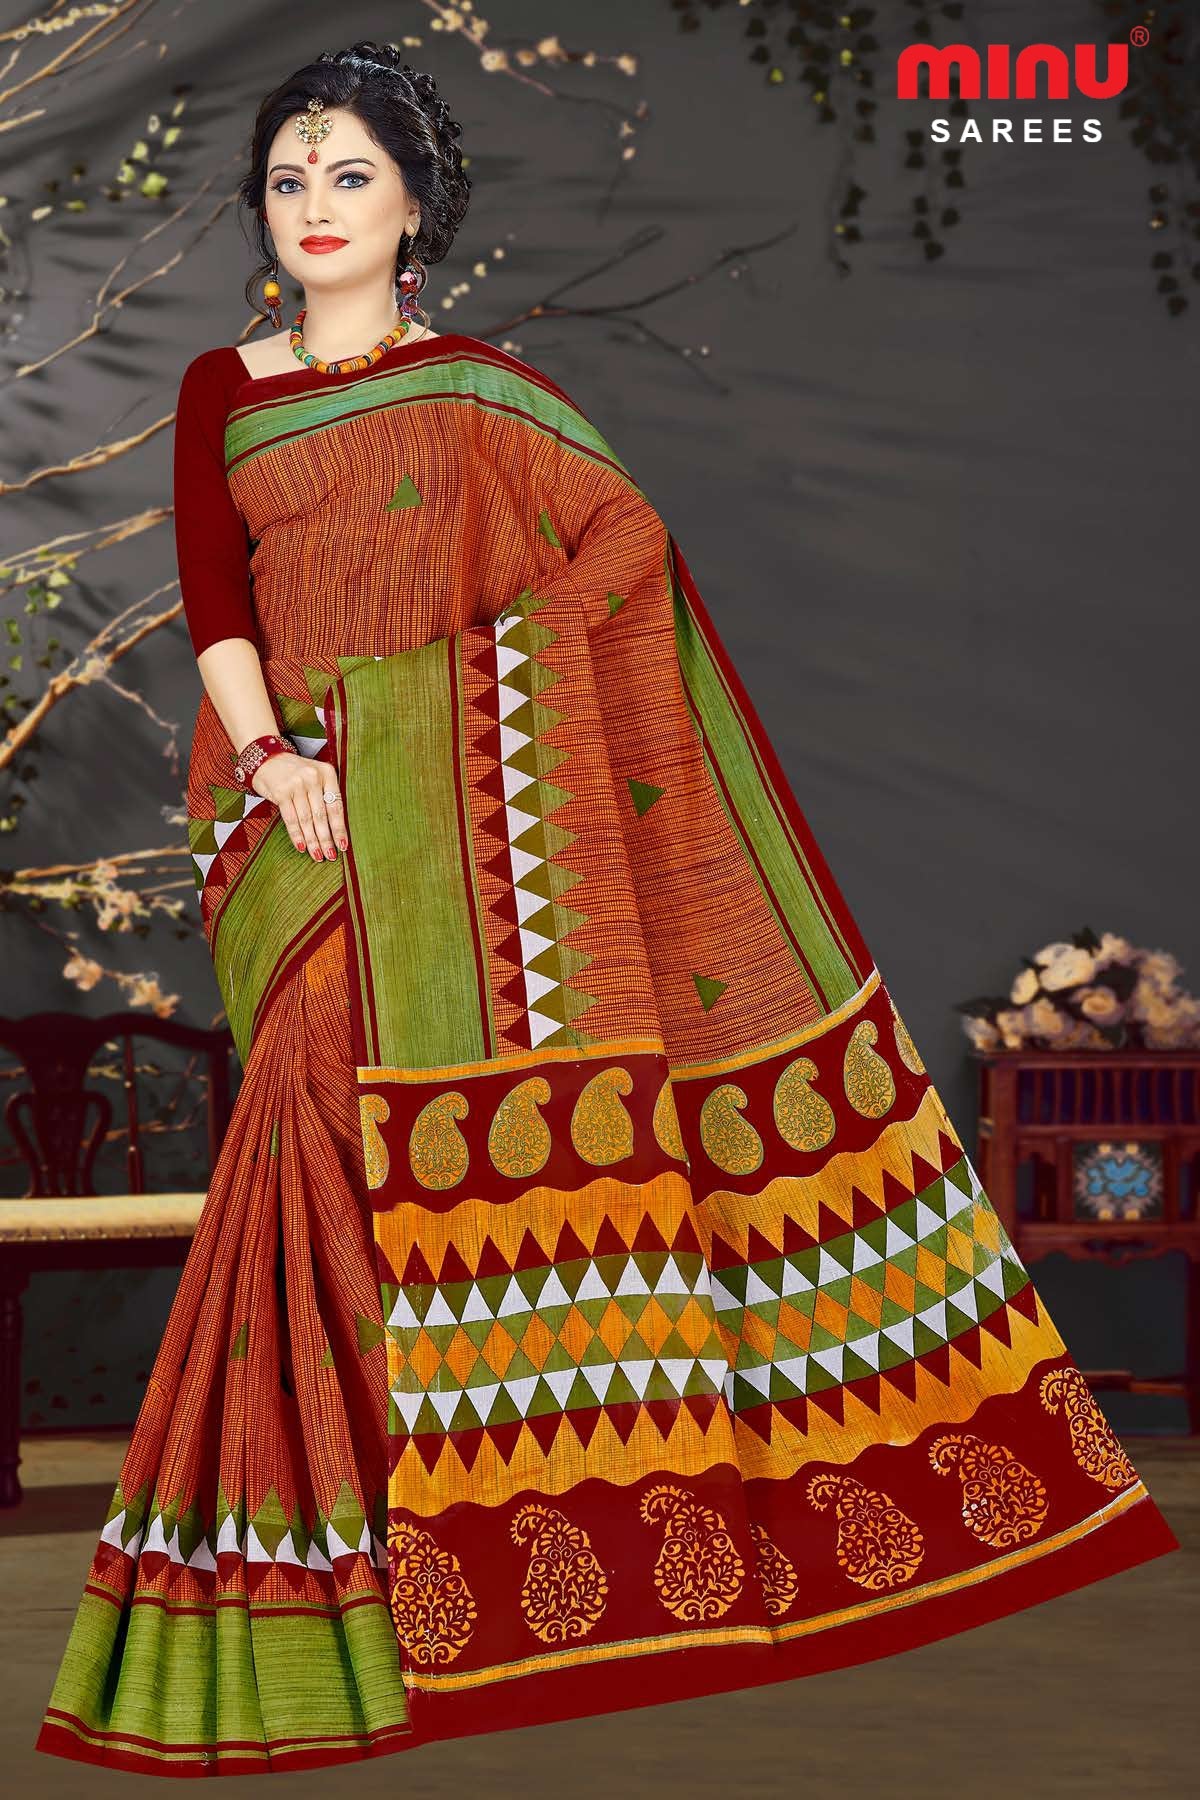 Colored printed saree wearing women image